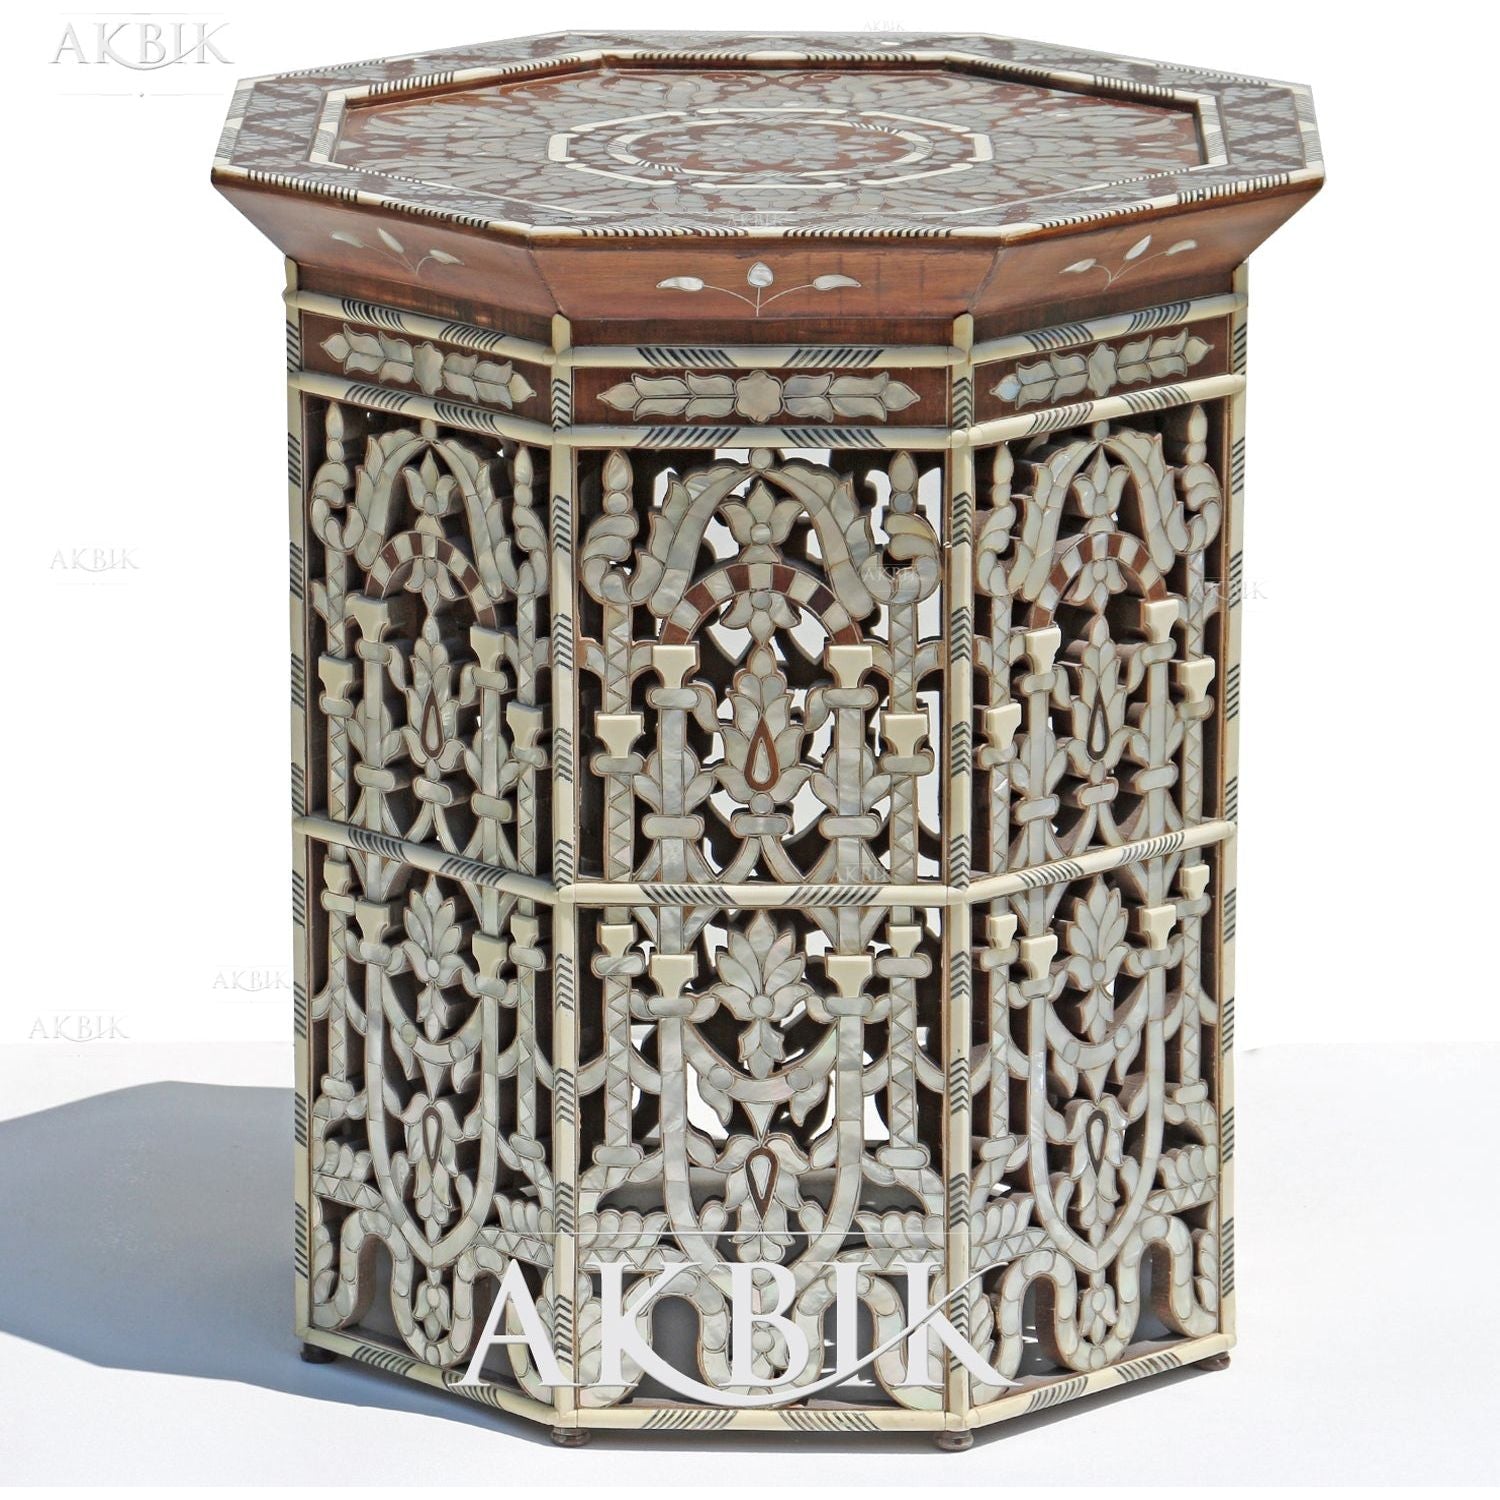 JEWELS OF THE ORIENT TABLE - AKBIK Furniture & Design